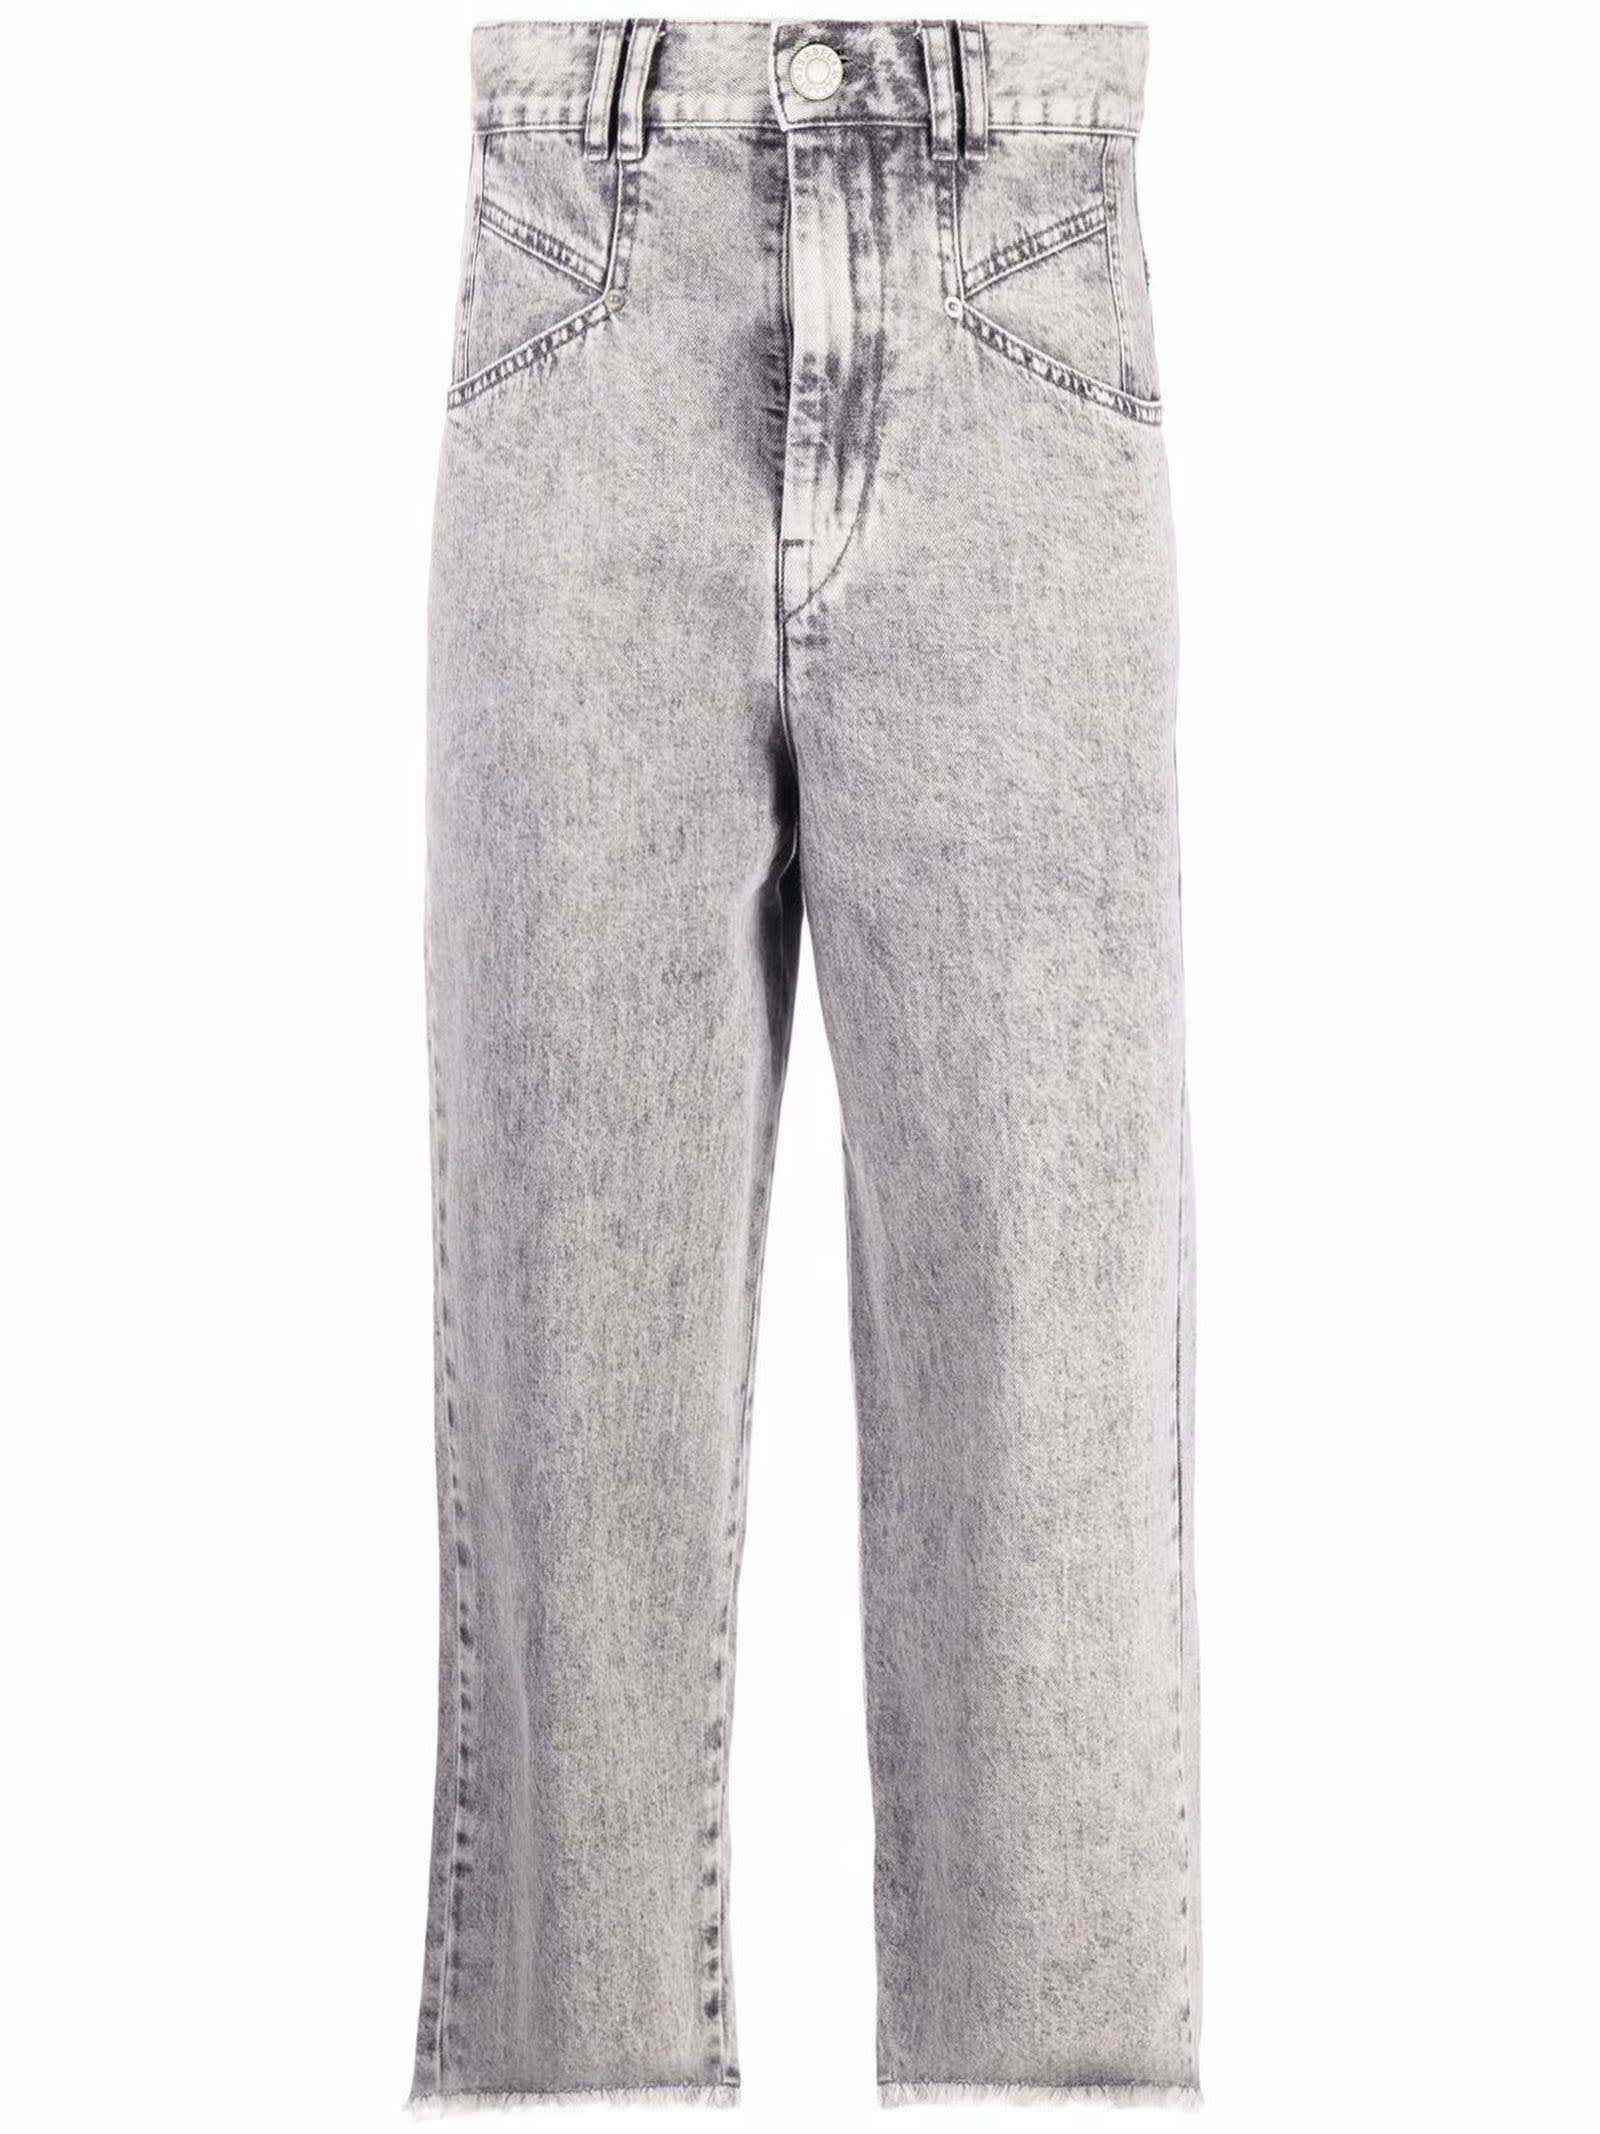 Isabel Marant Light Grey Cotton Jeans